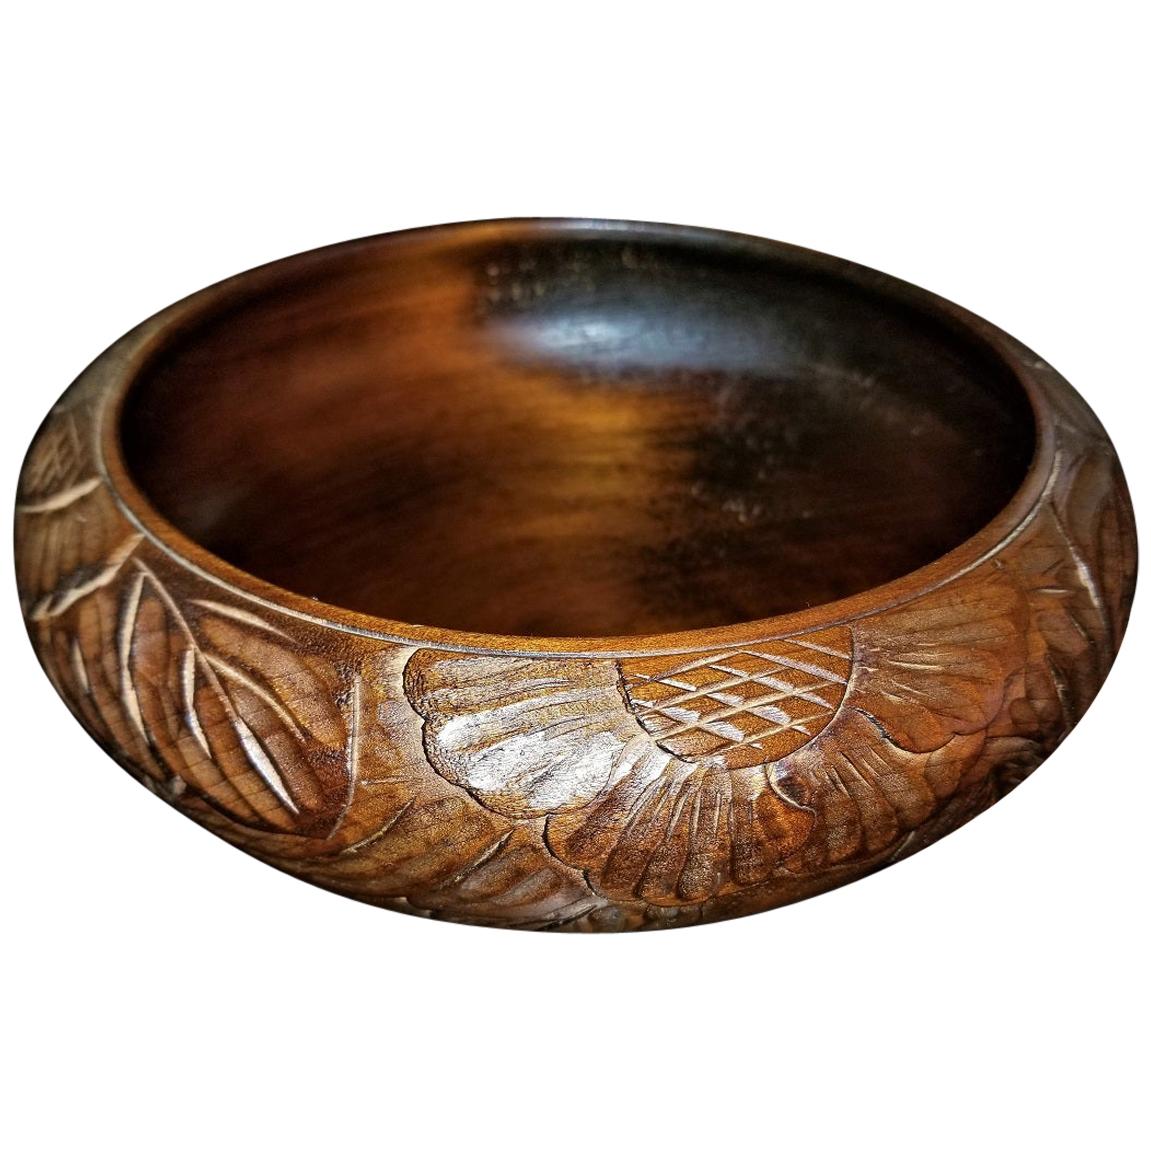 Art Nouveau American Carved Walnut Bowl